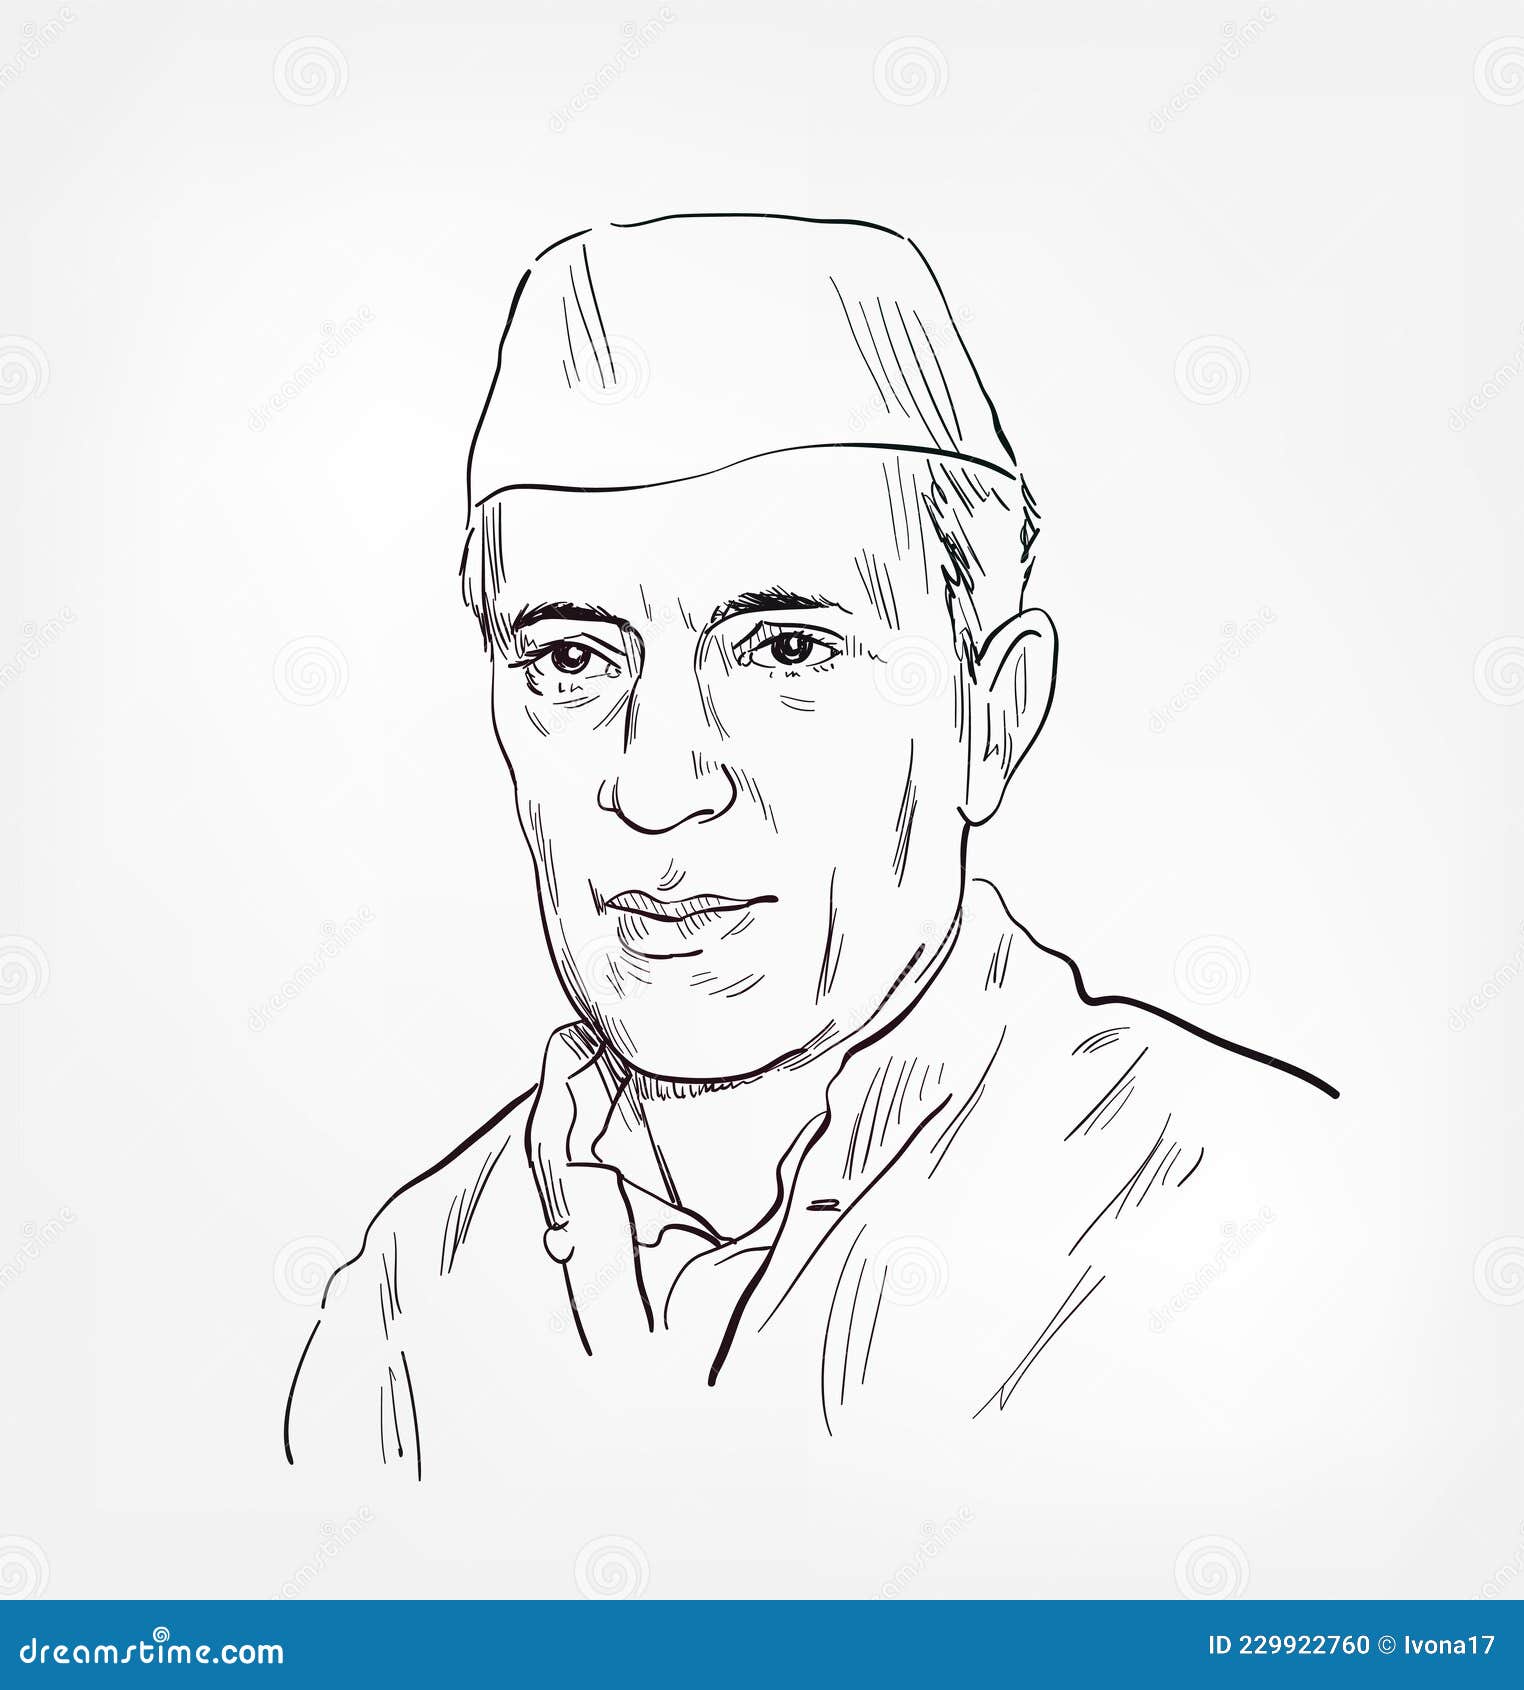 Jawaharlal Nehru drawing | Easy drawings for kids, Easy drawings, Drawing  for kids